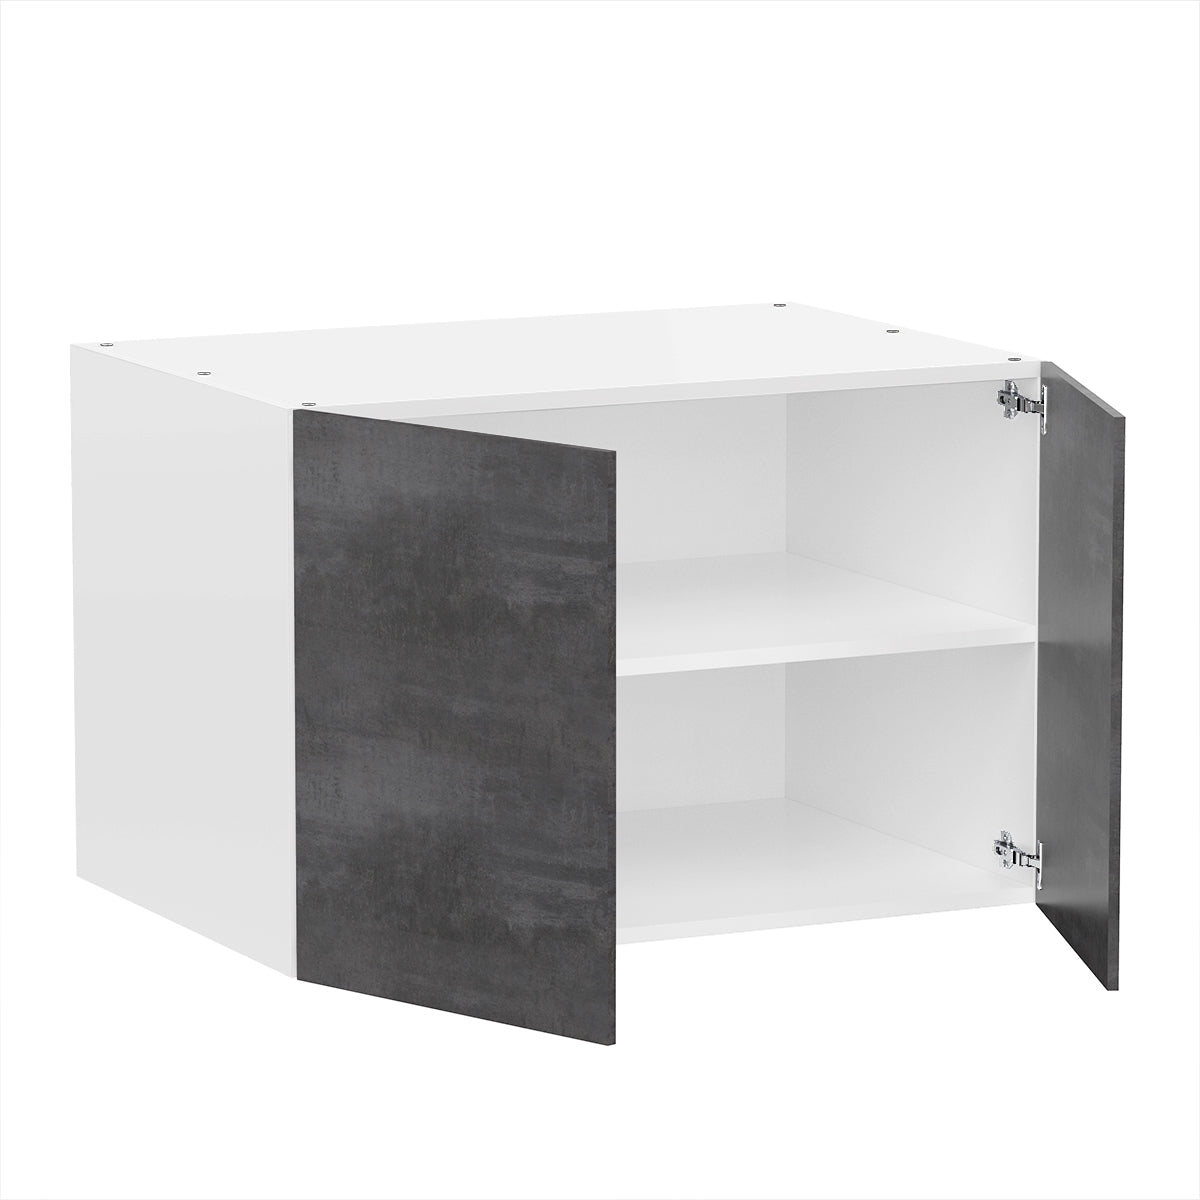 RTA - Rustic Grey - Double Door Refrigerator Wall Cabinets | 30"W x 24"H x 24"D